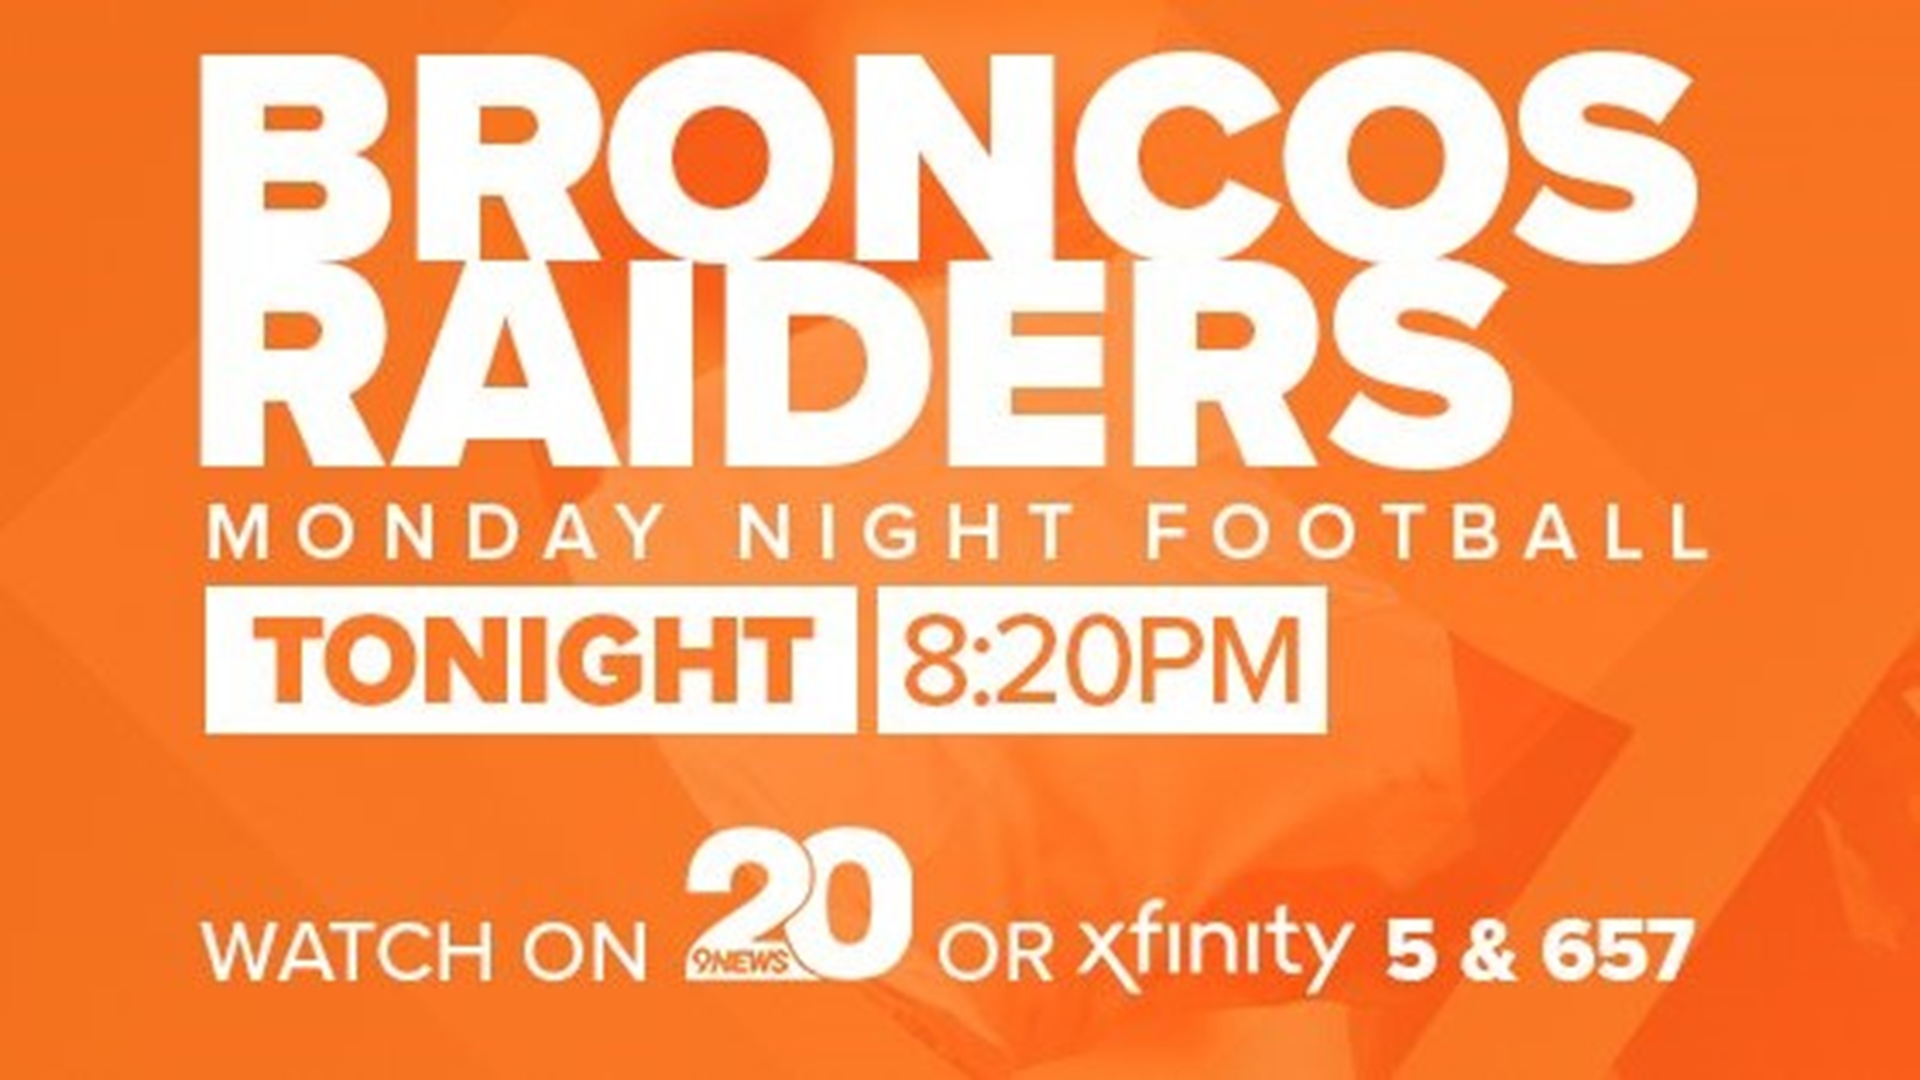 Drew Litton draws some cartoons related to the Denver Broncos season opener Monday night against the Raiders.